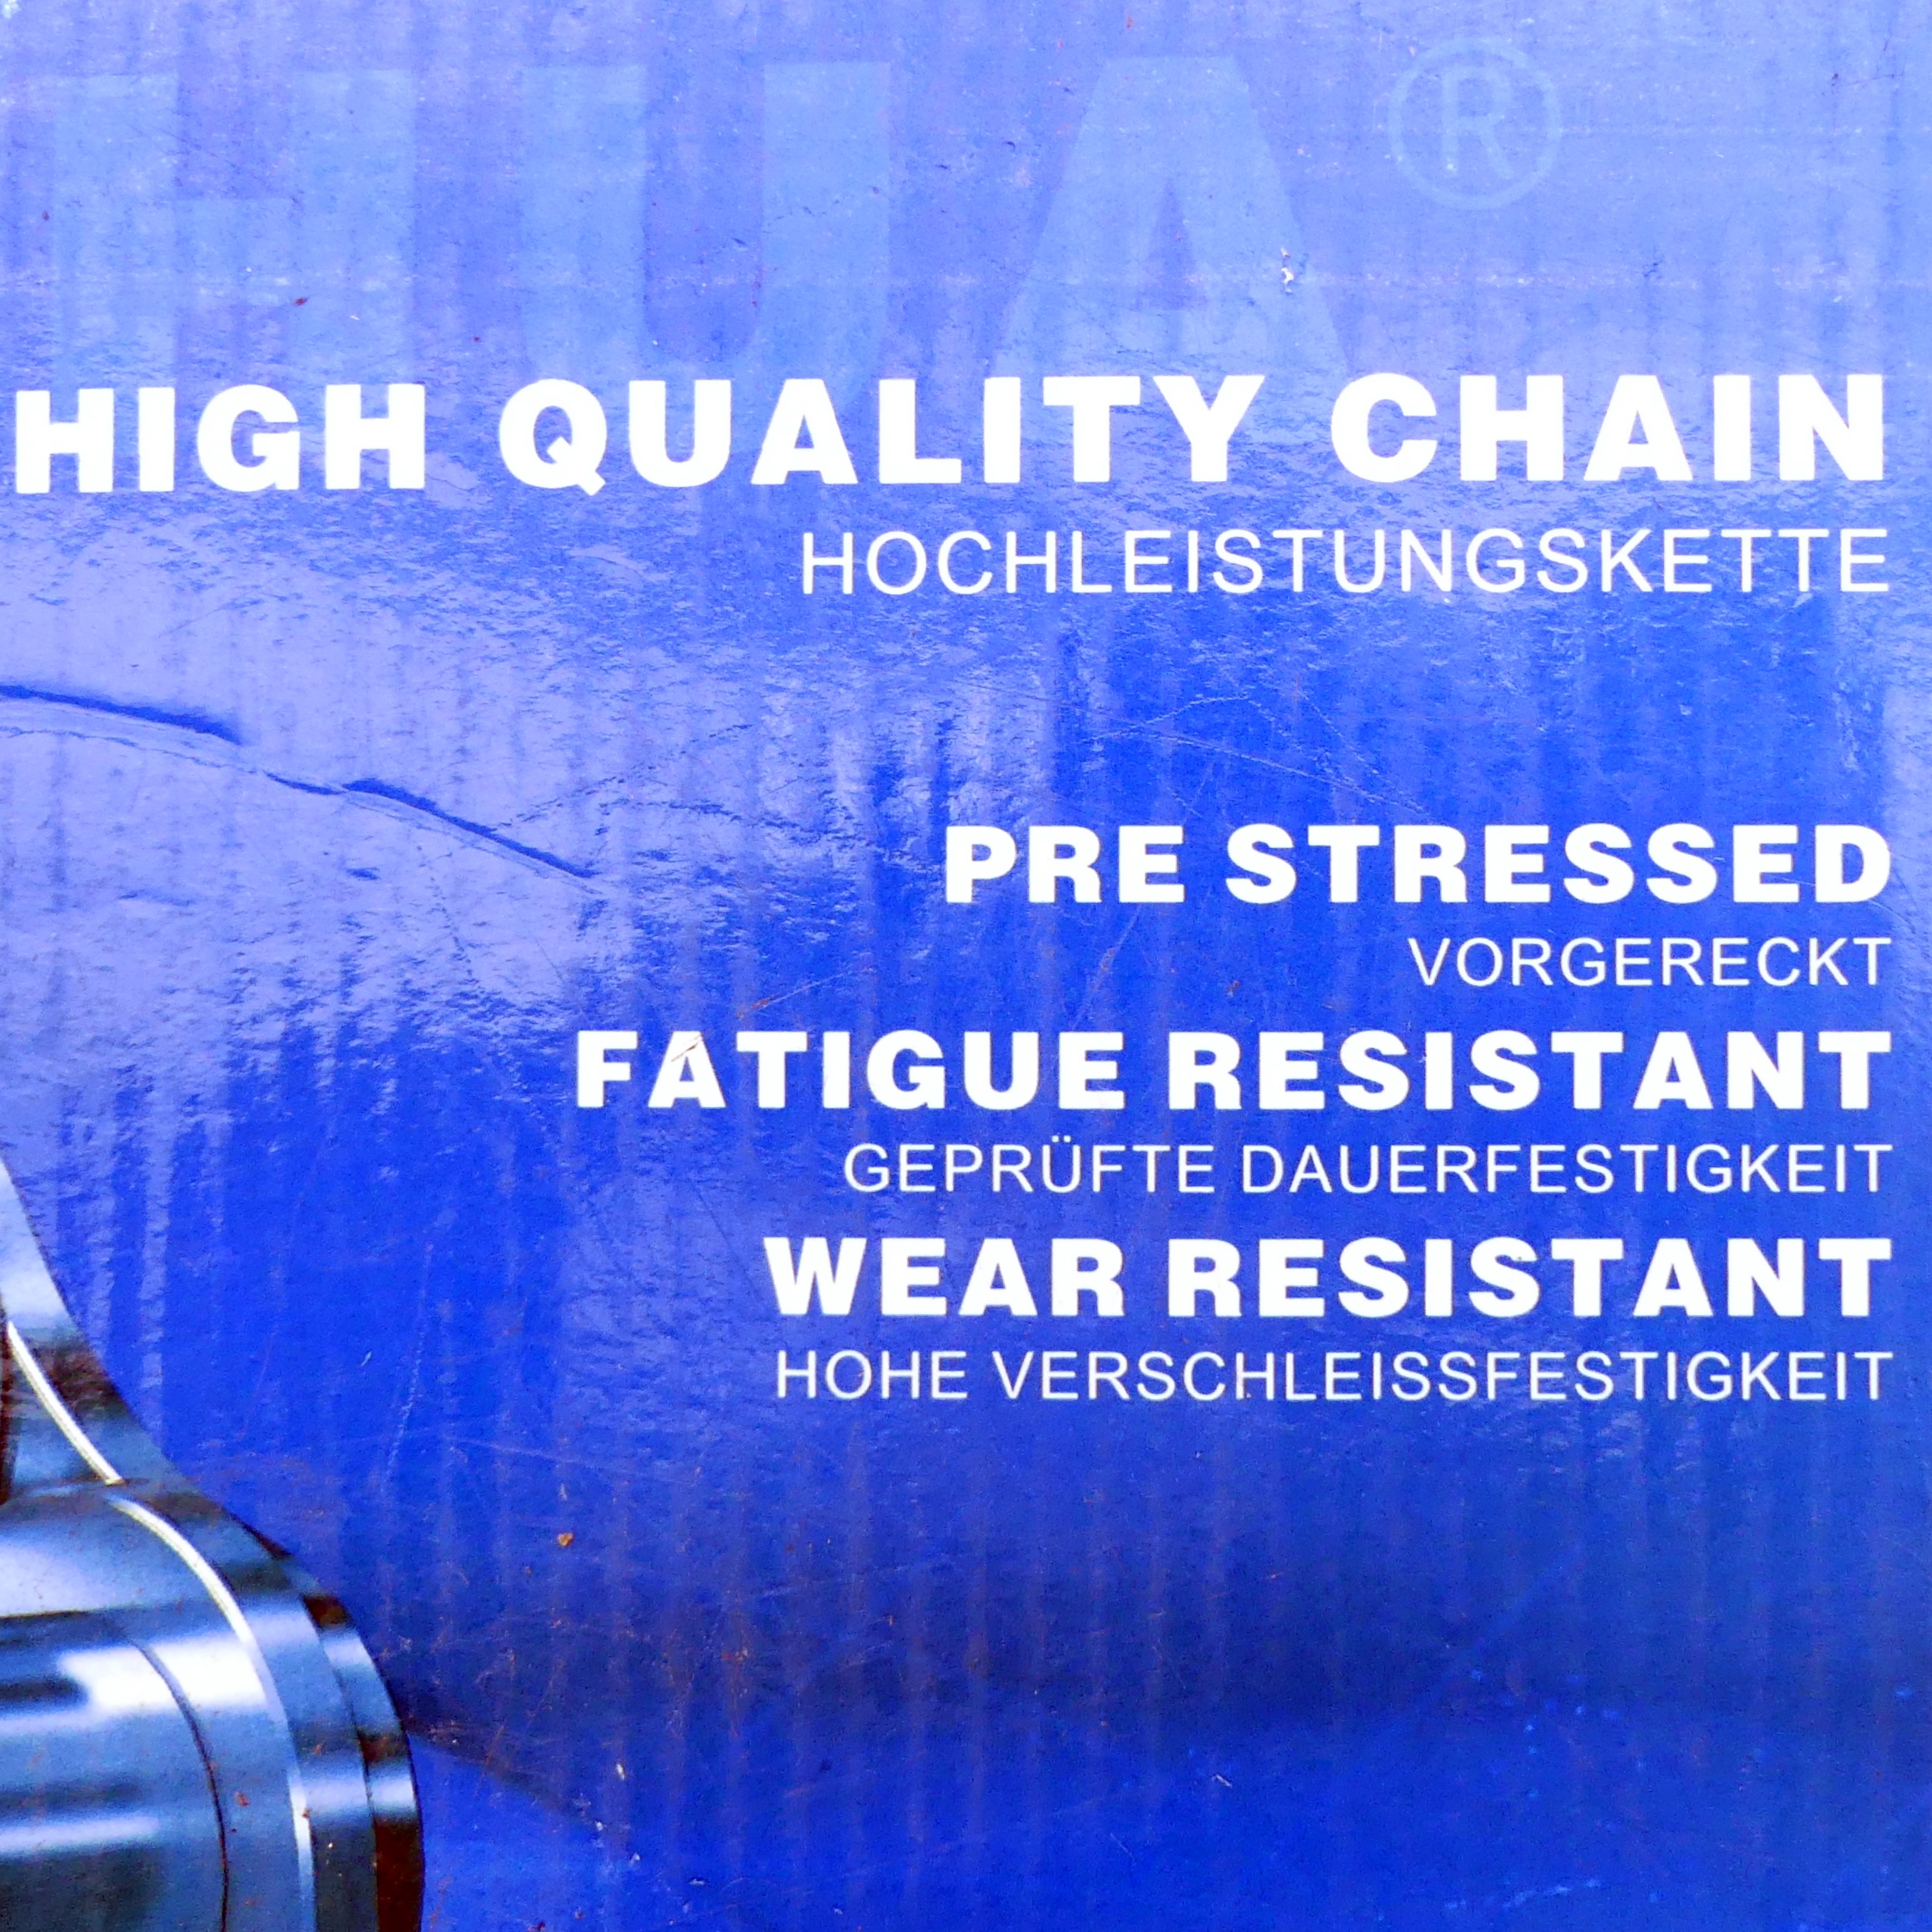 Roller chain ISO 08B-2 